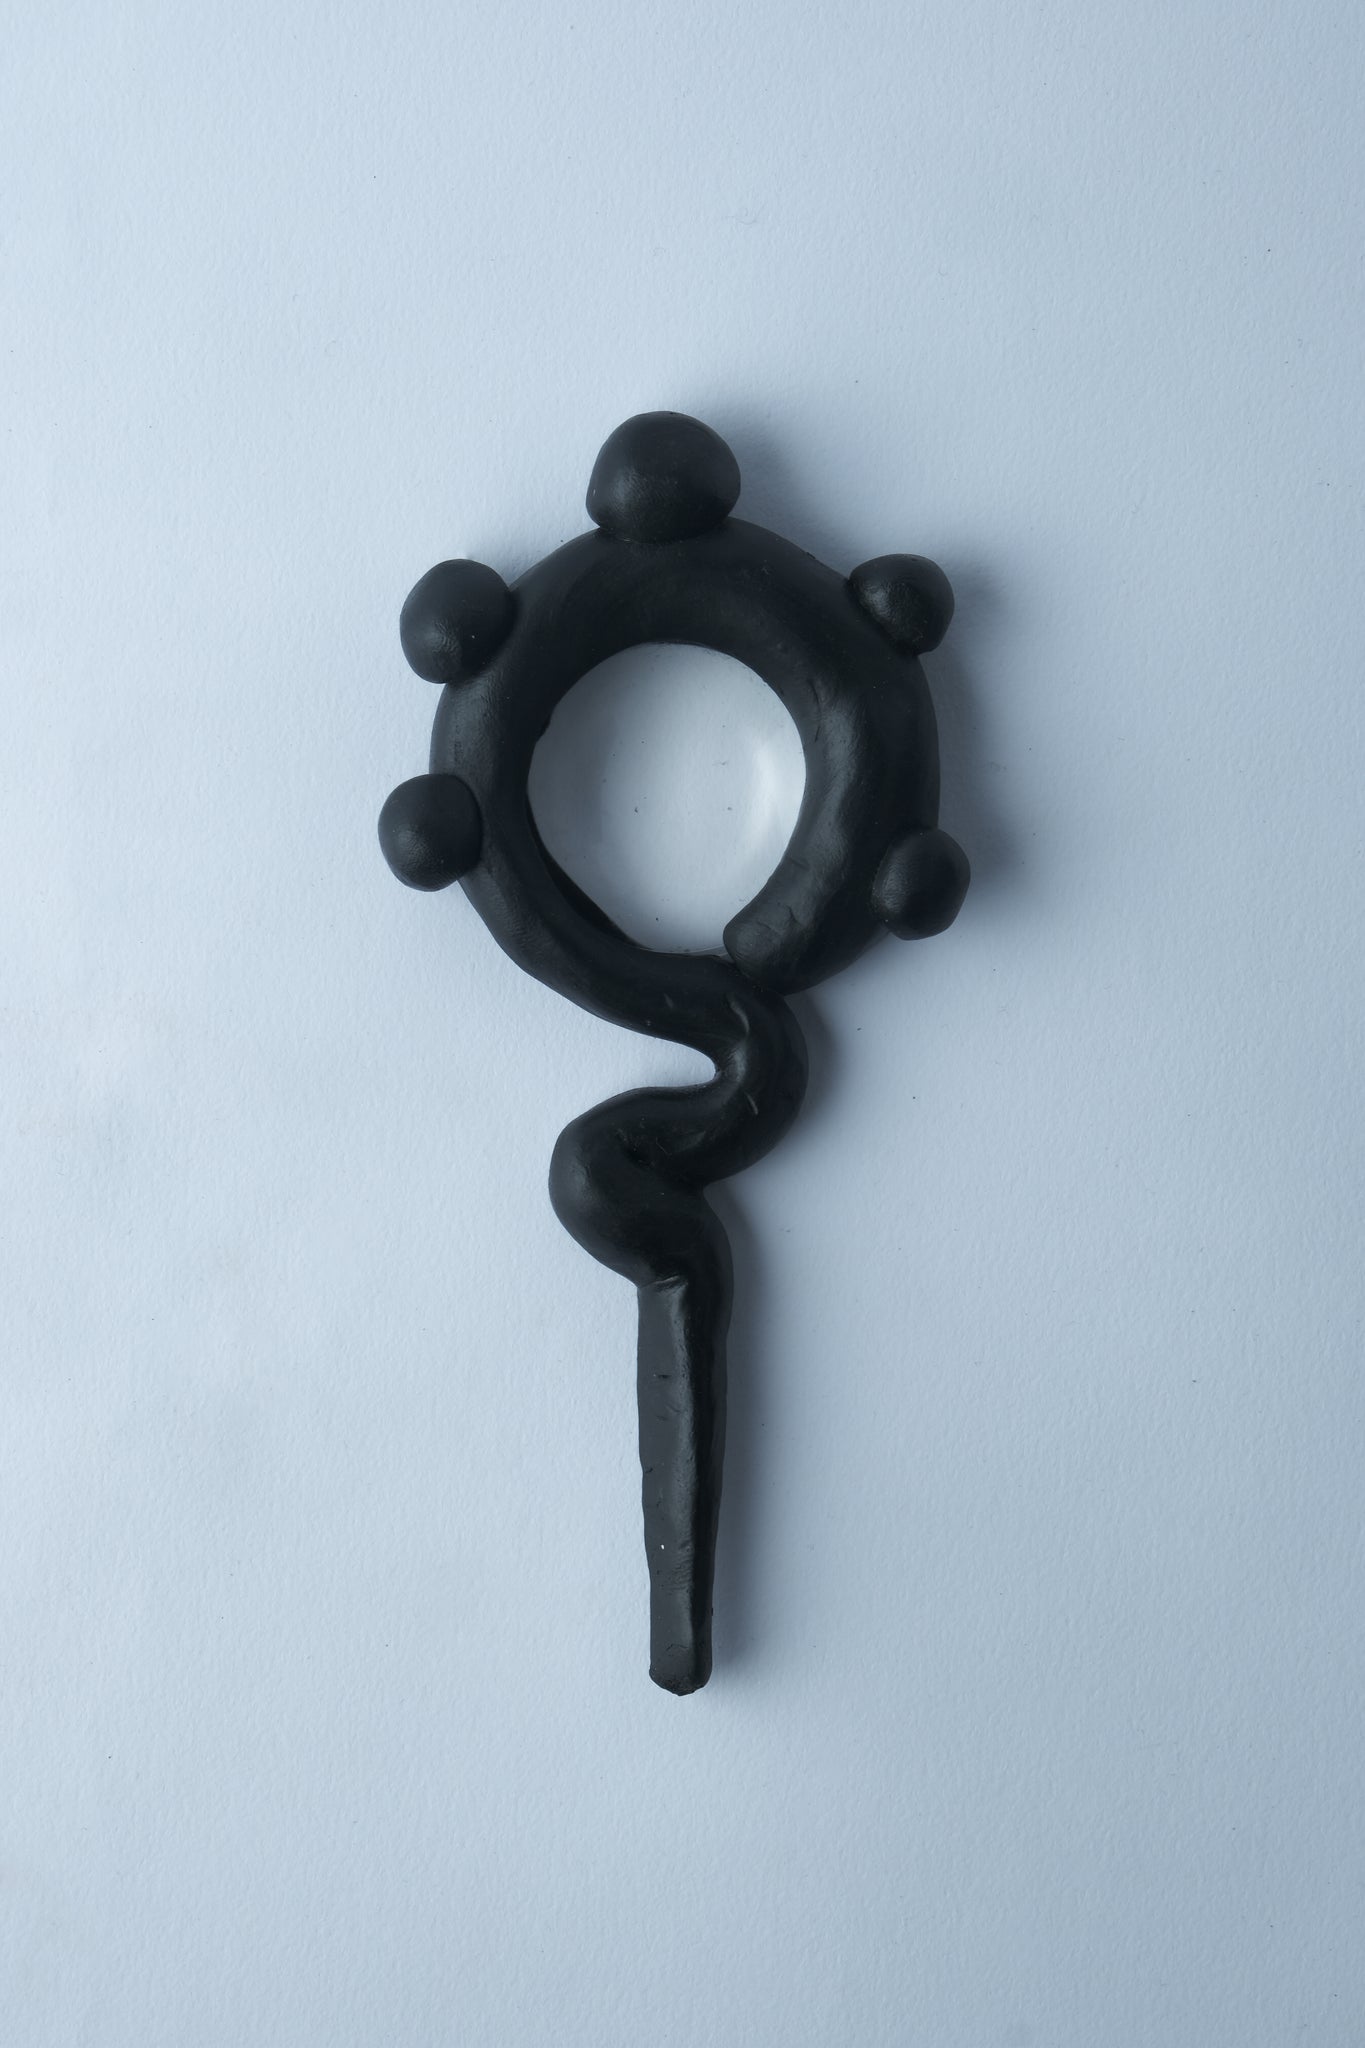 1/1 – Black Scepter Magnifier